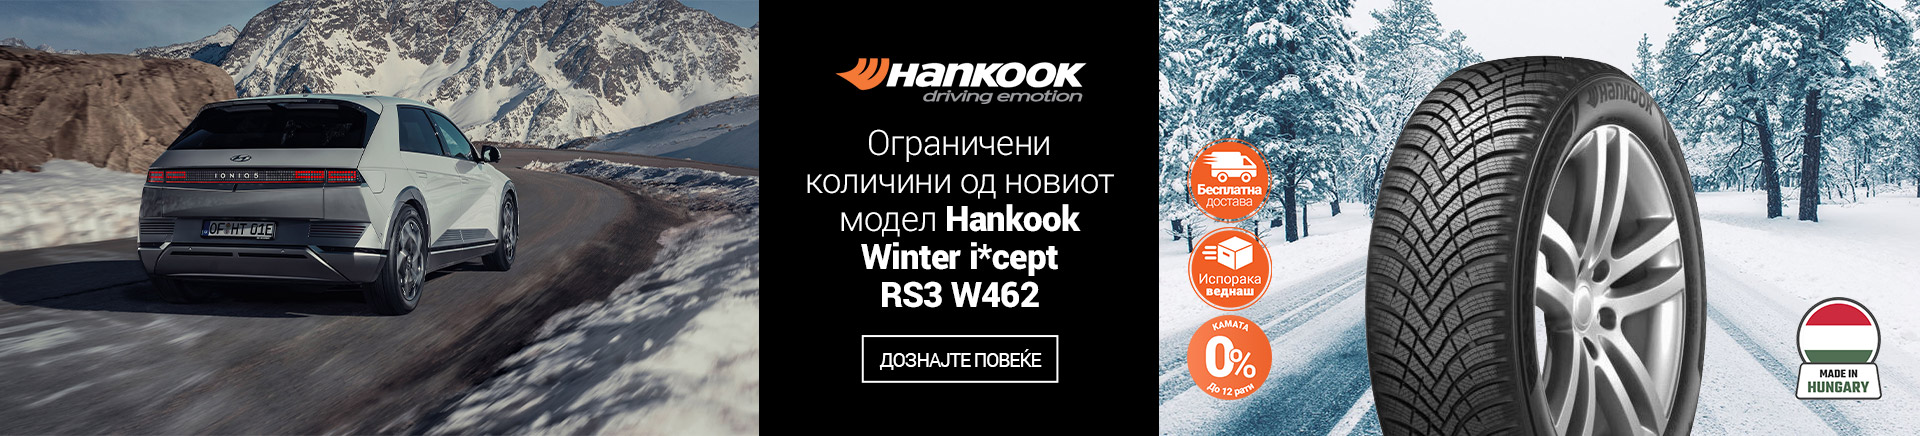 MK Hankook Winter icept RS3 W462 WIDESCREEN 1920 X 436.jpg